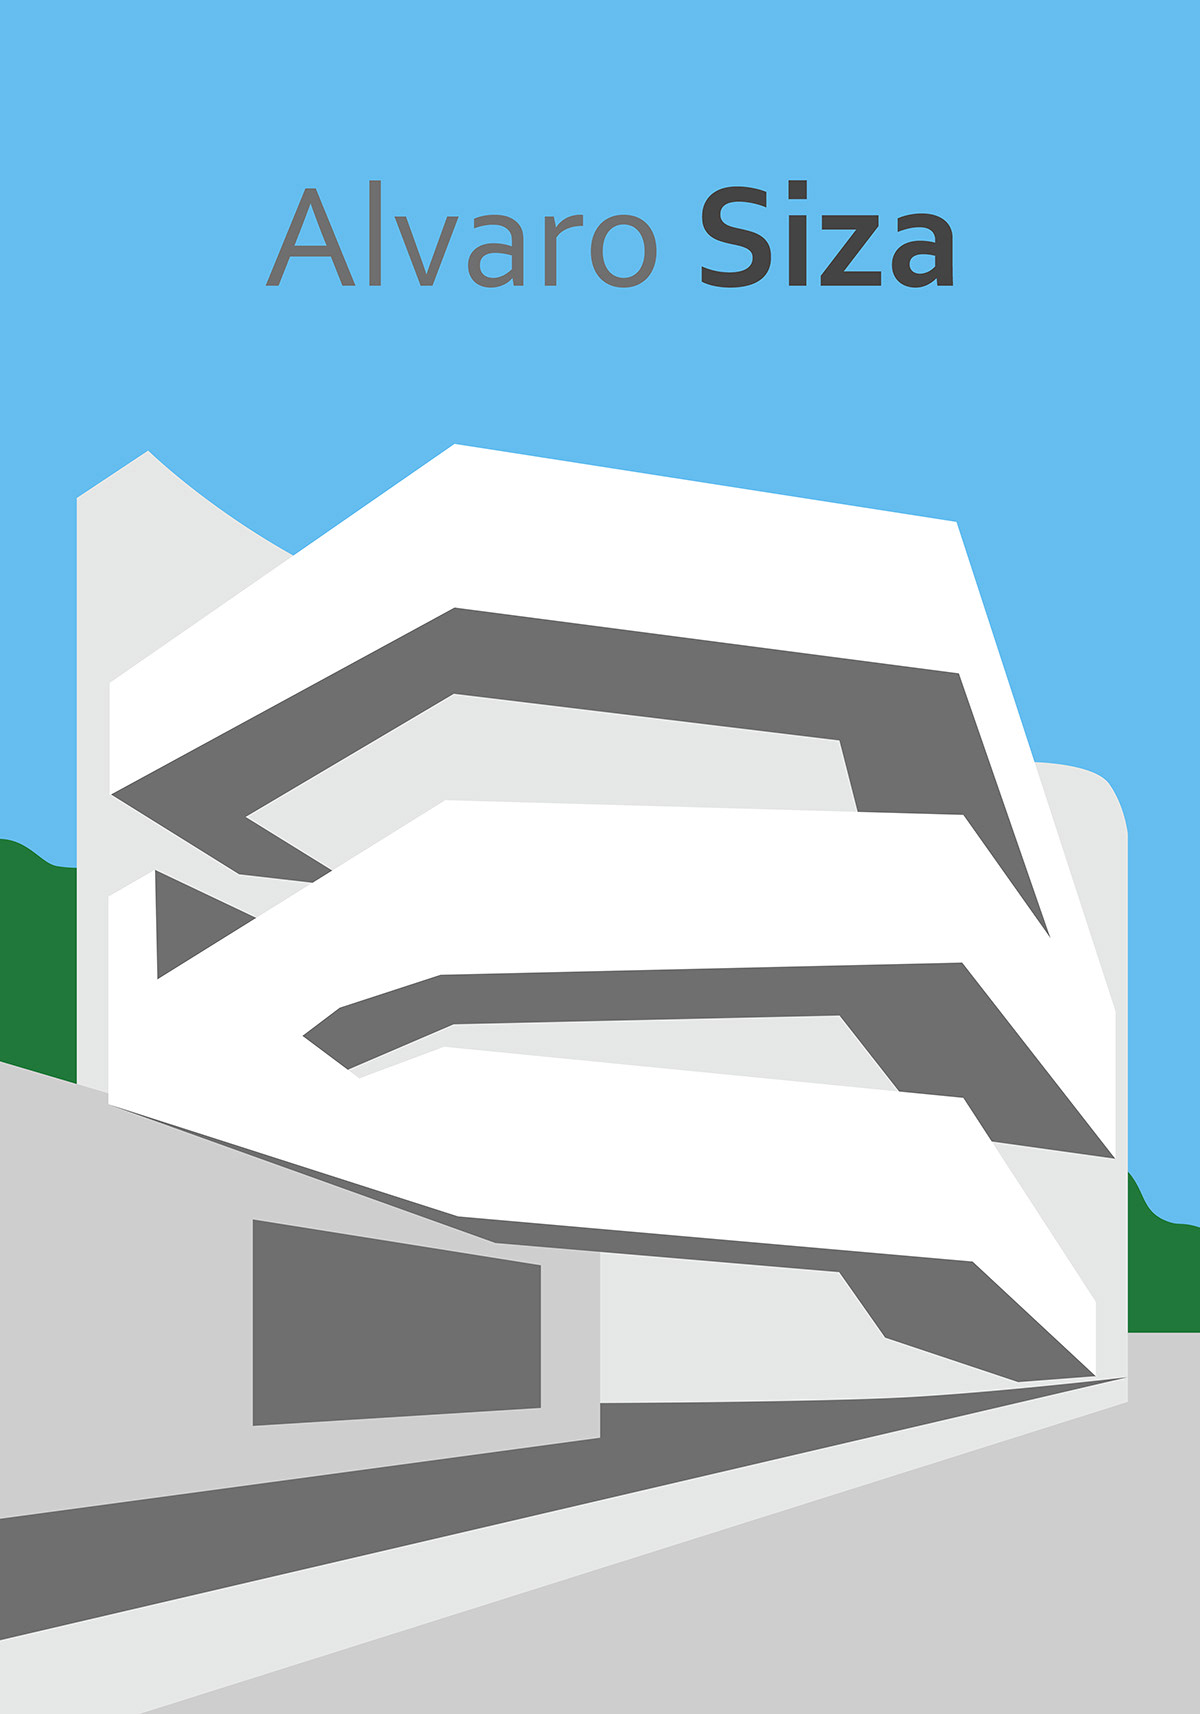 Alvaro Siza architecture poster banner designer Socialmedia Graphic Designer Adobe Photoshop графический дизайн Плакатная графика